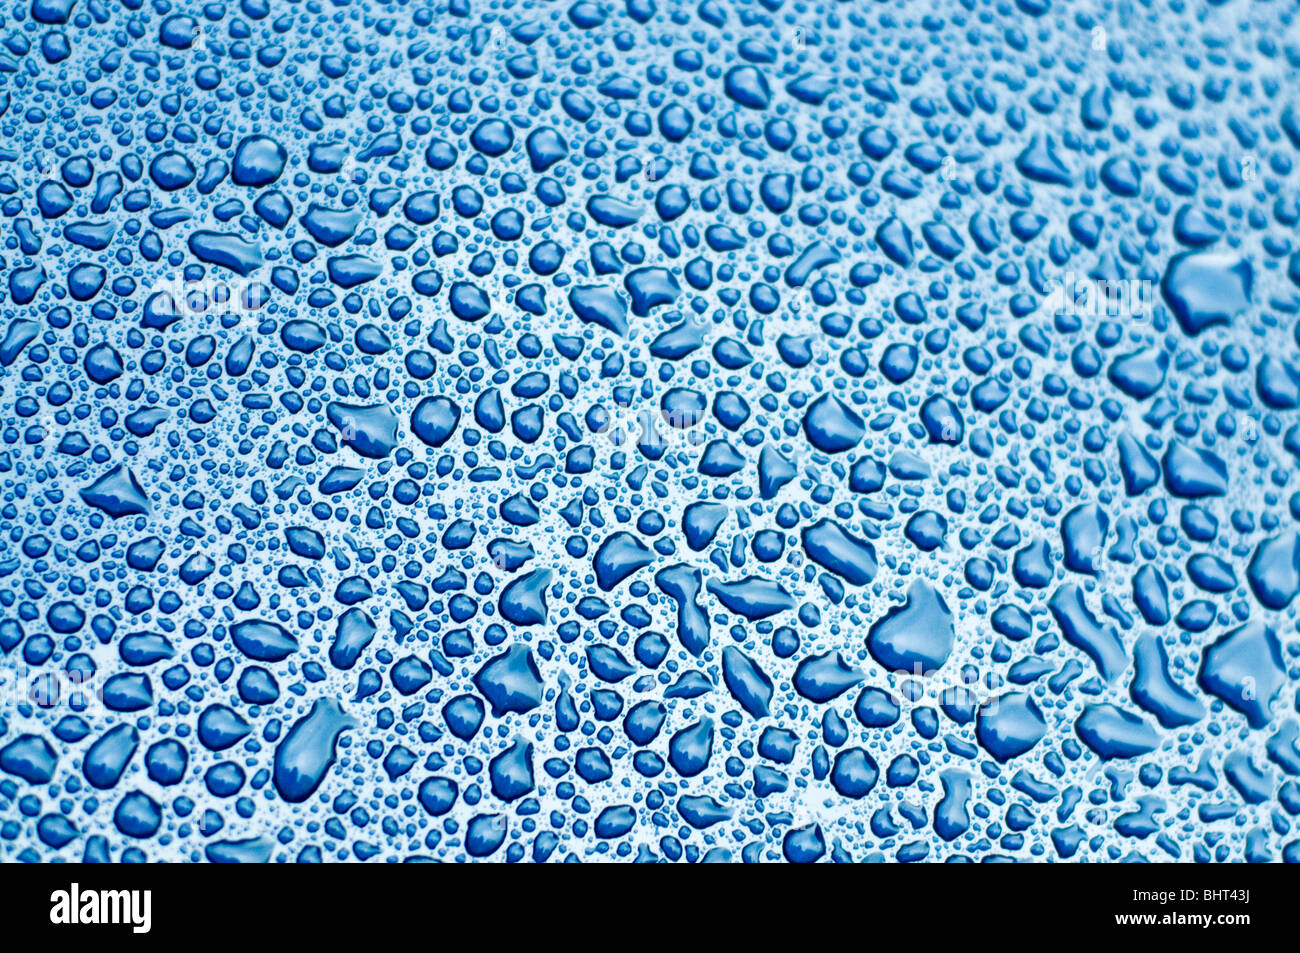 Rain drops on a metallic surface Stock Photo